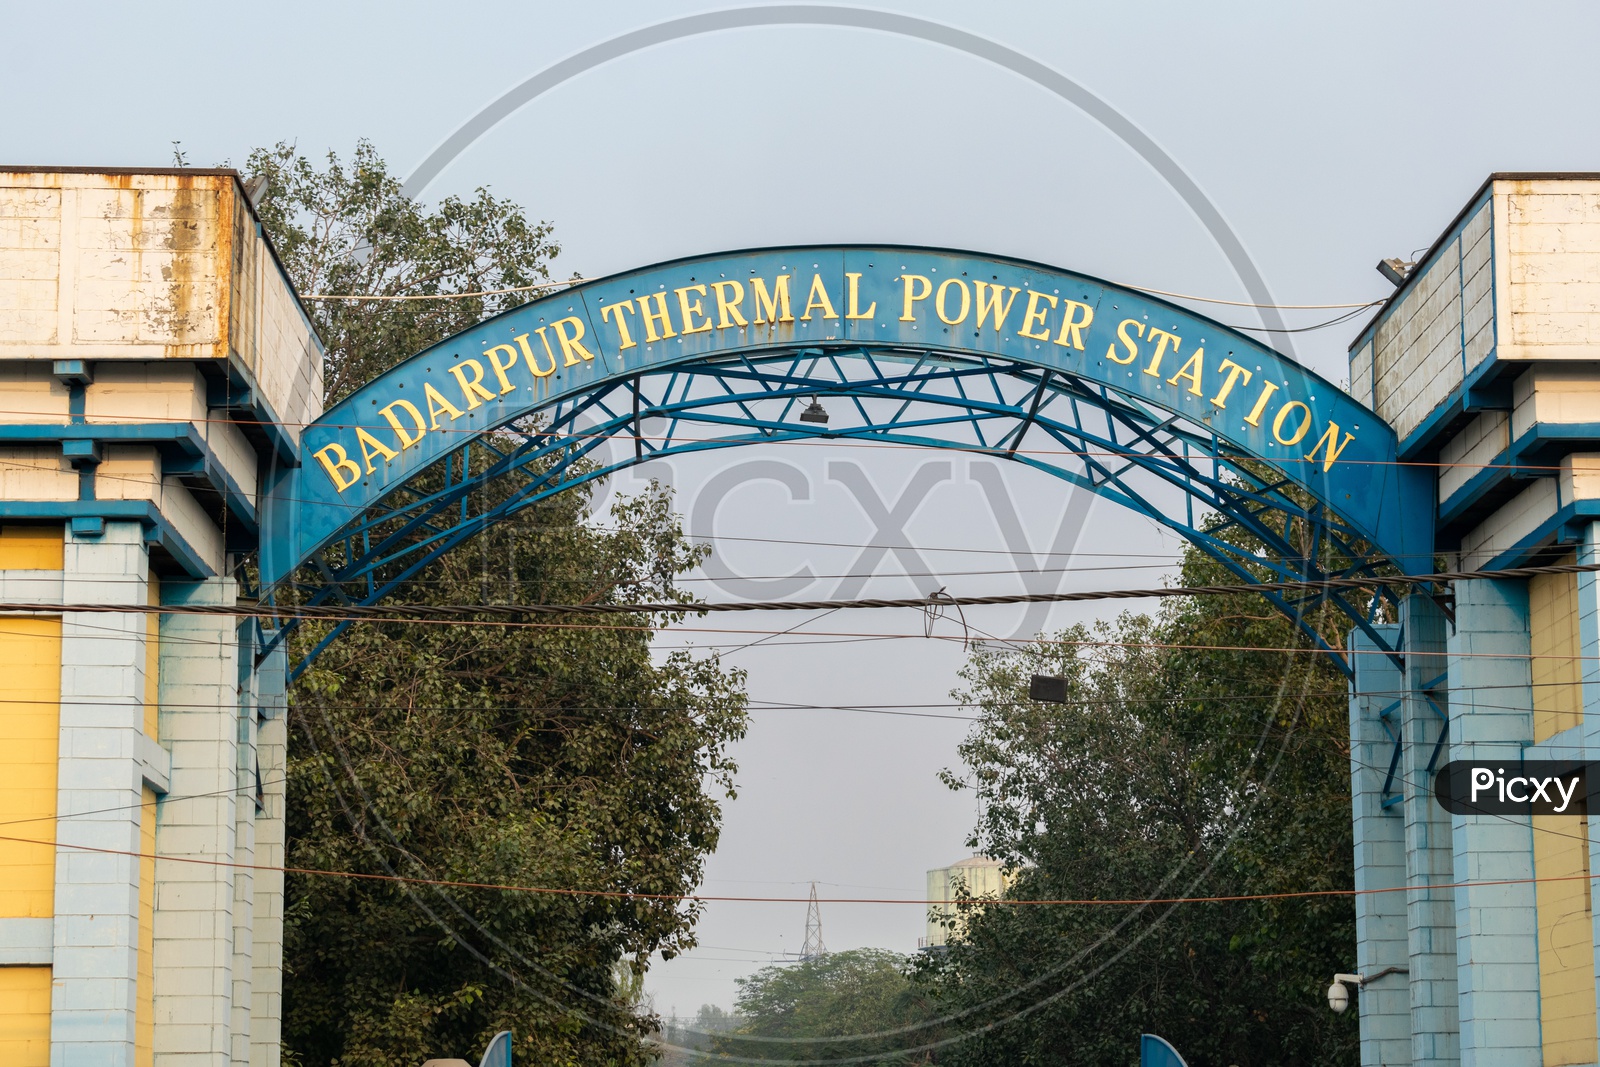 Badarpur Thermal Power Station entrance